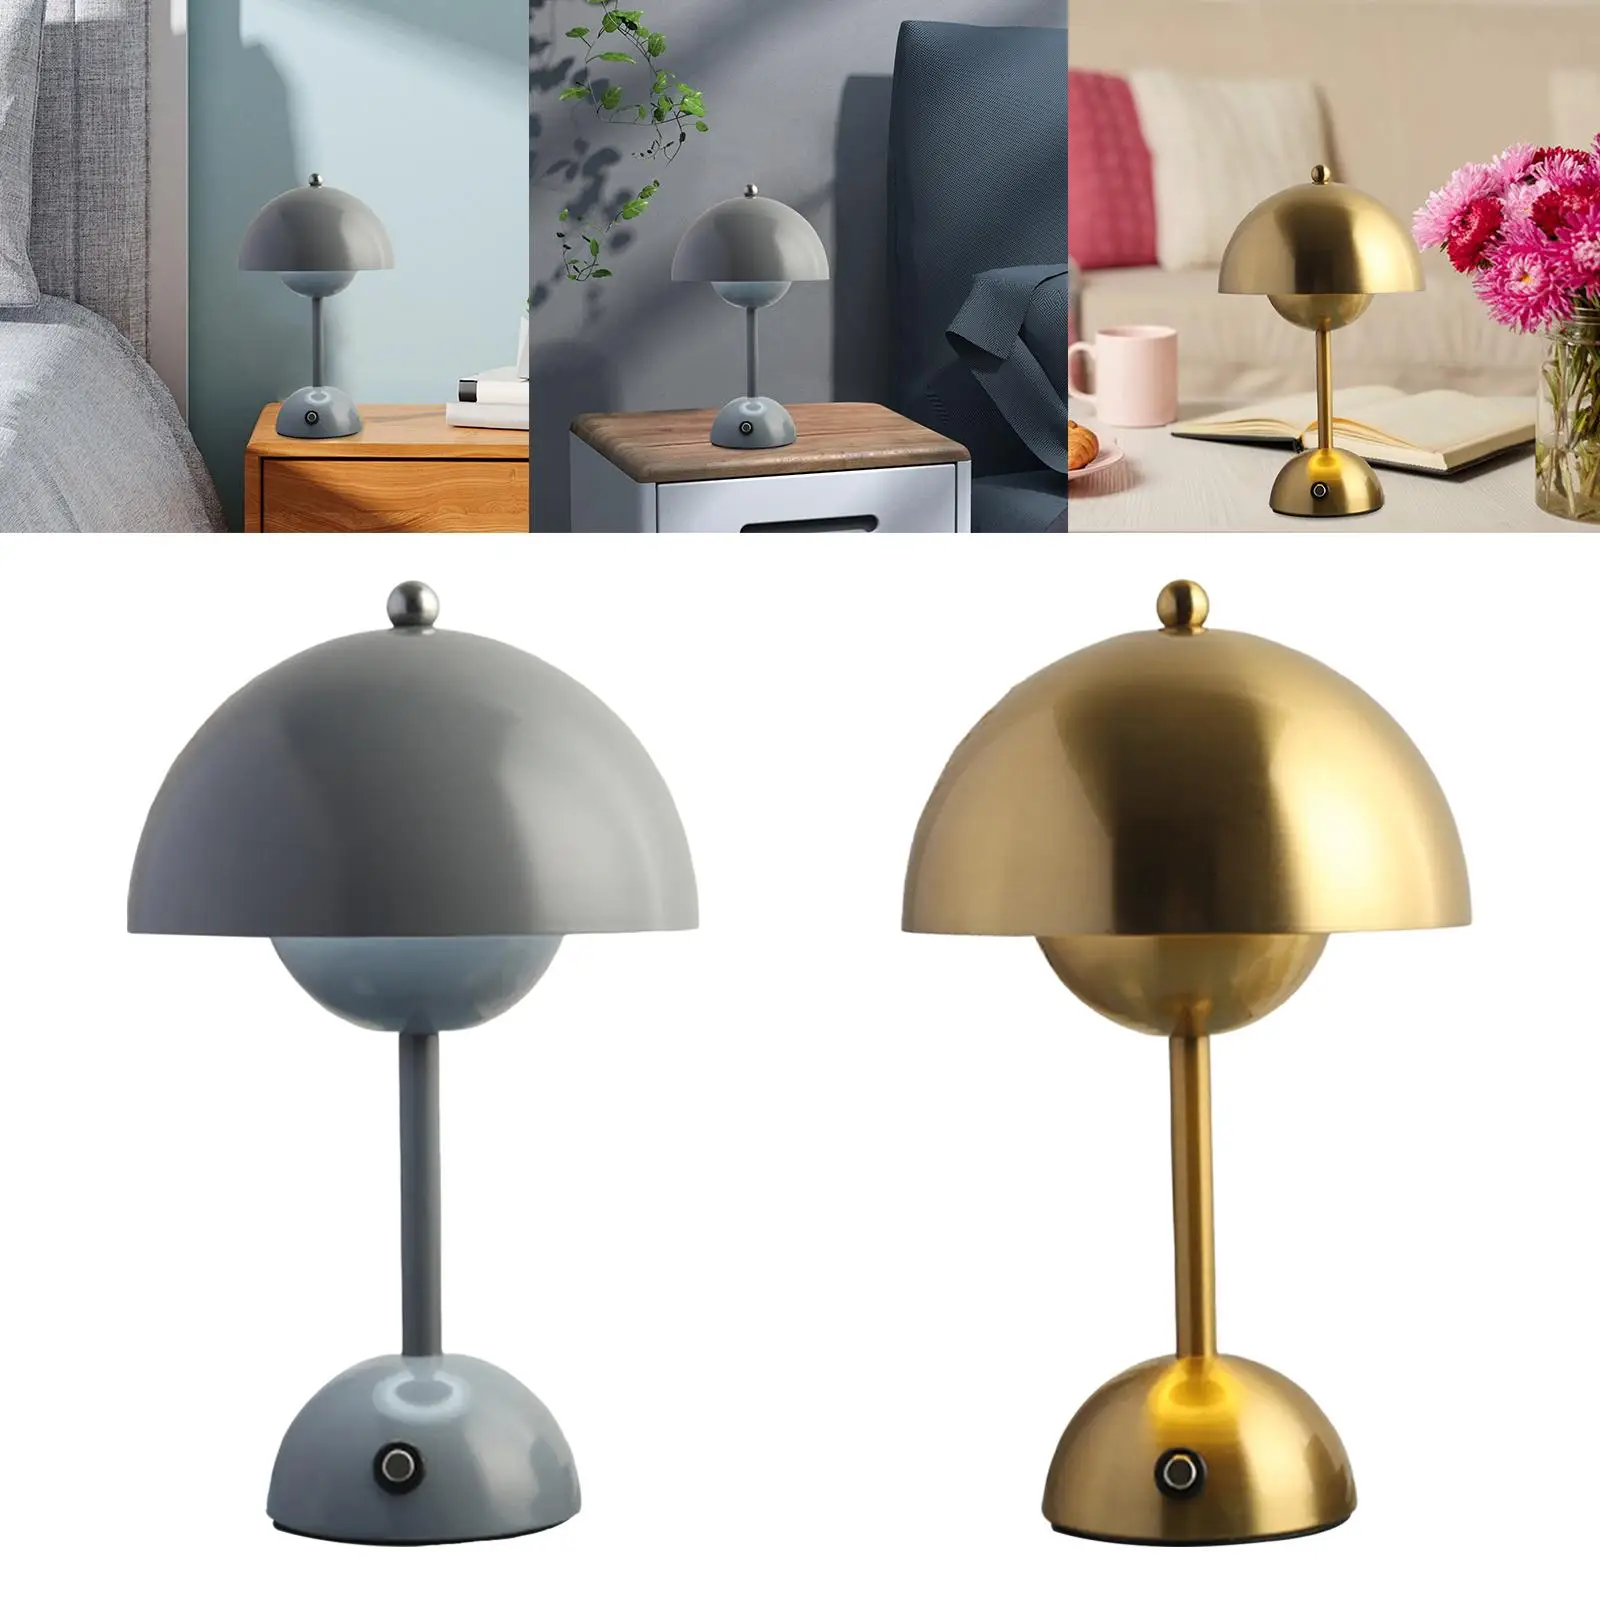 Modern Mushroom Bud Lamp Lamp LED Study Decorative Romantic Wedding Metal USB for Home Restaurant Office Living Room